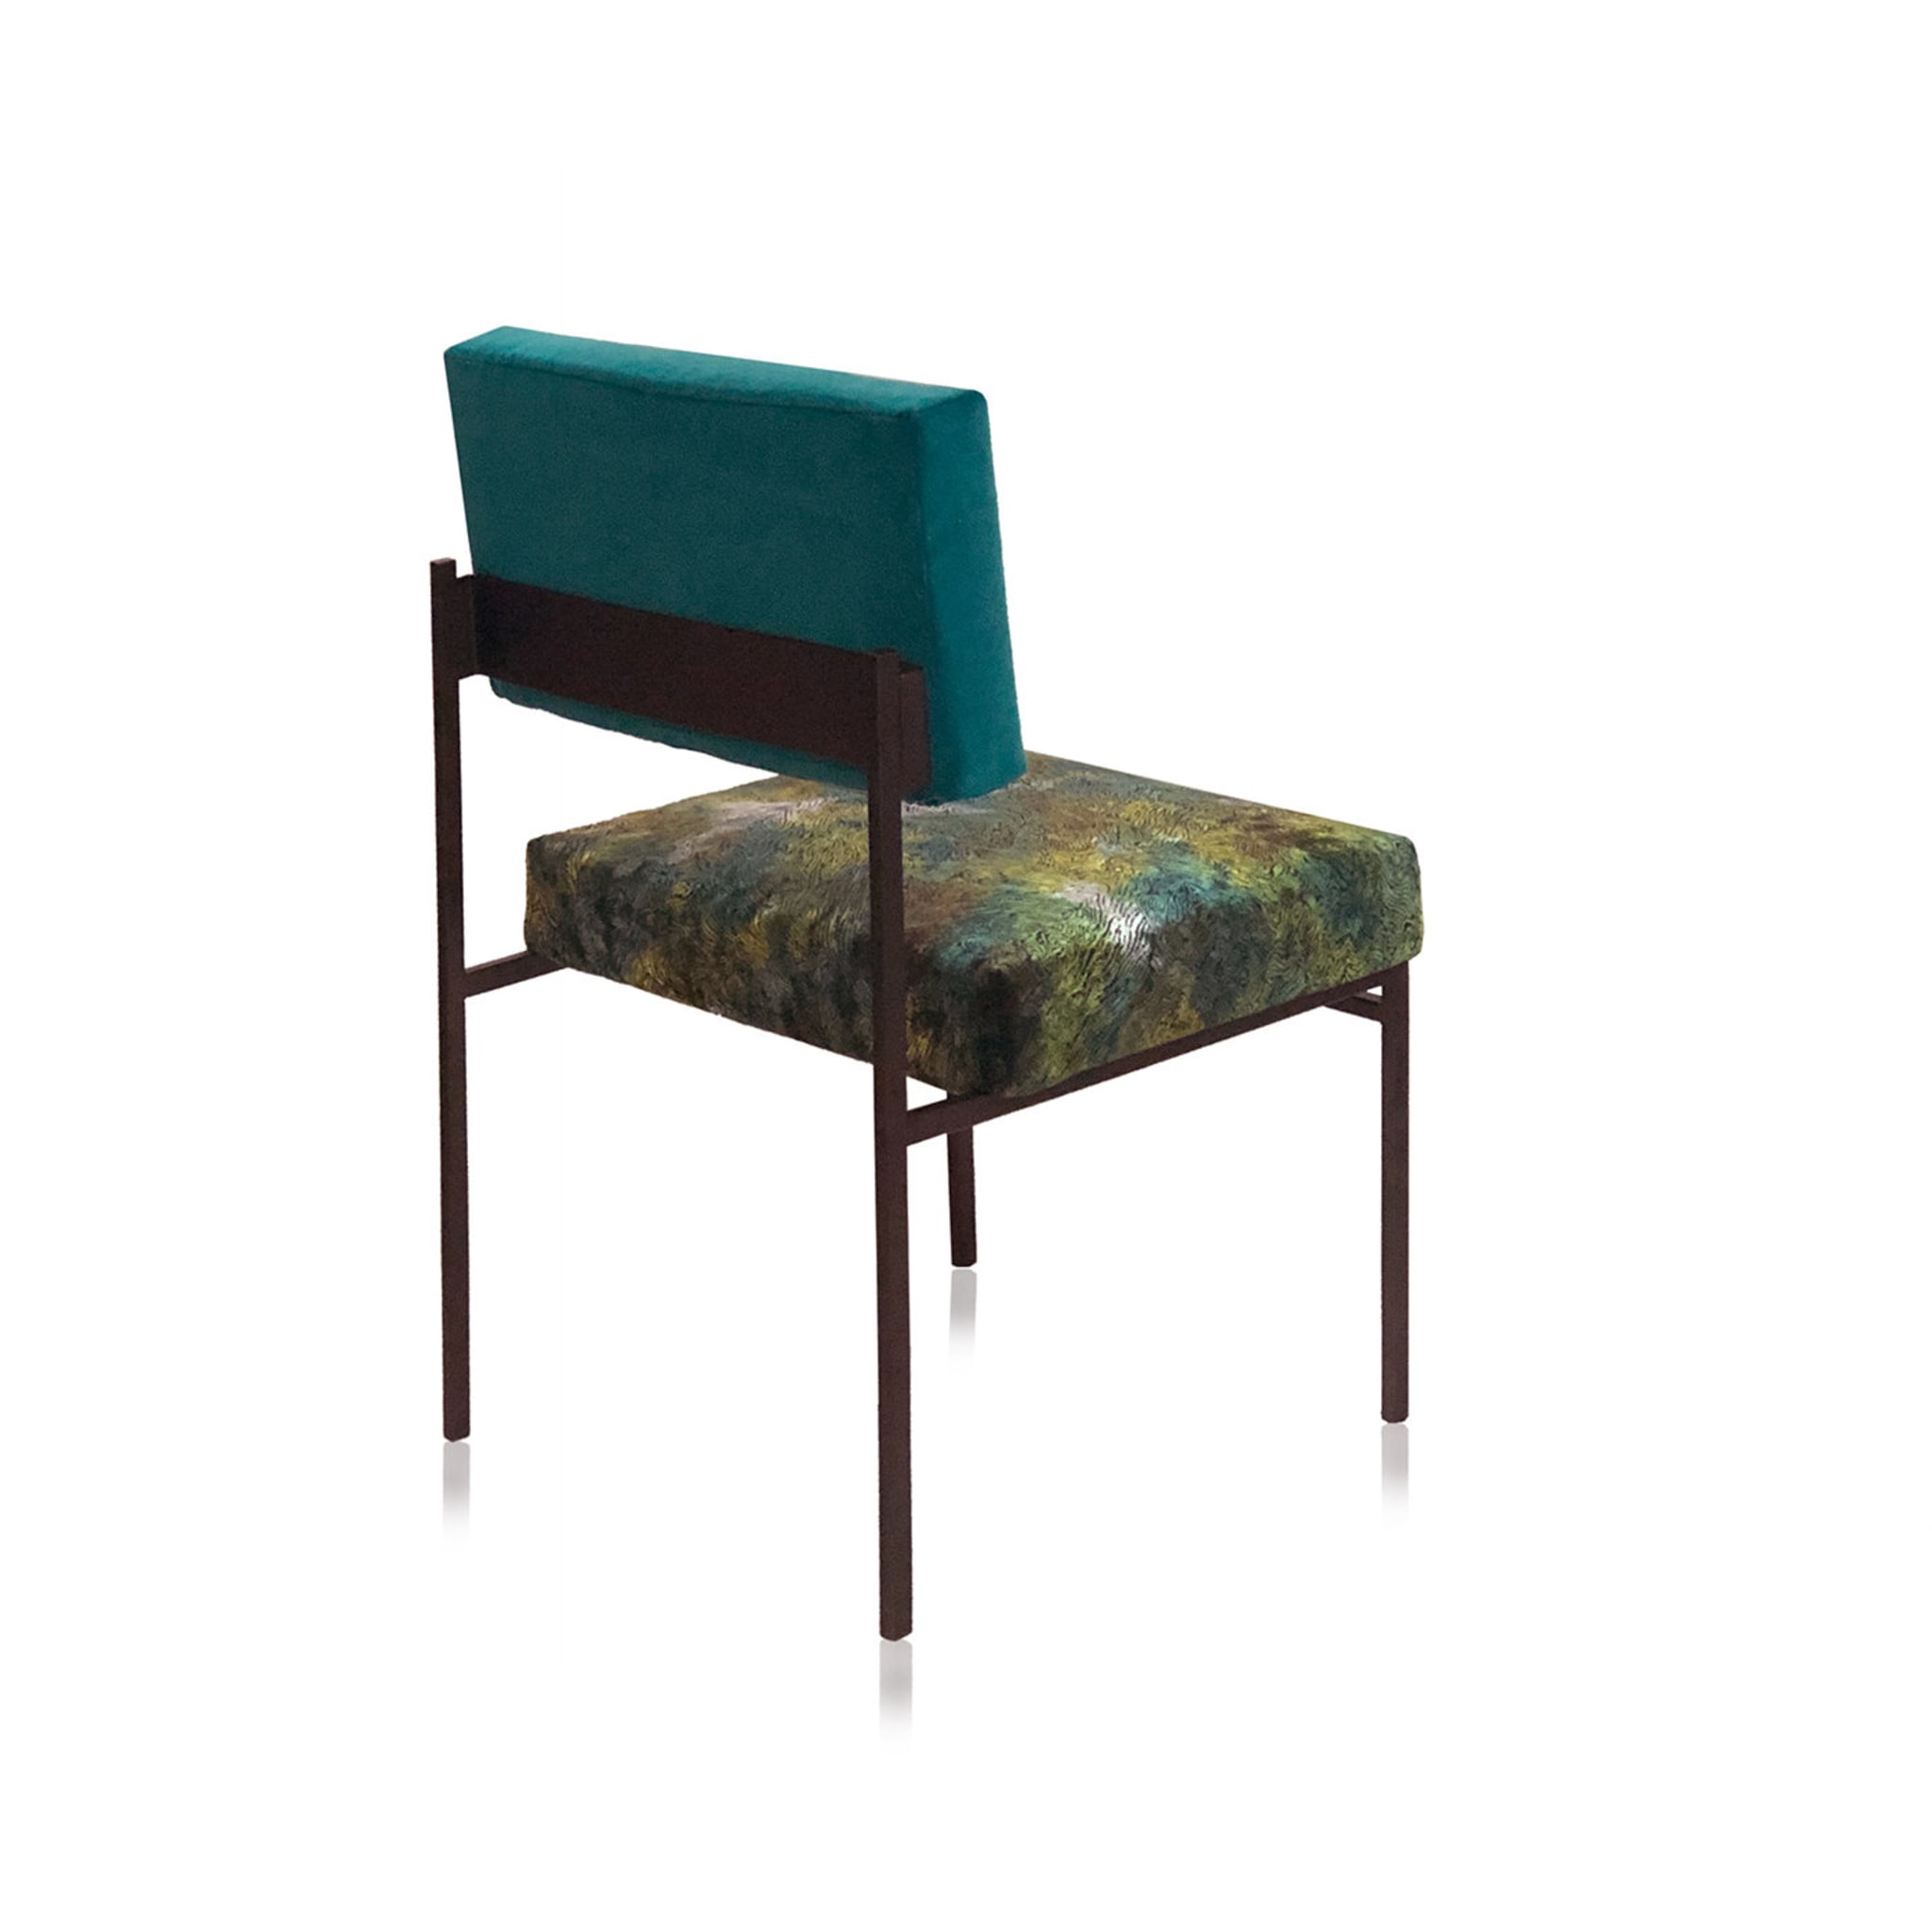 Aurea Green Velvet Chair by CtrlZak and Davide Barzaghi - Alternative view 1